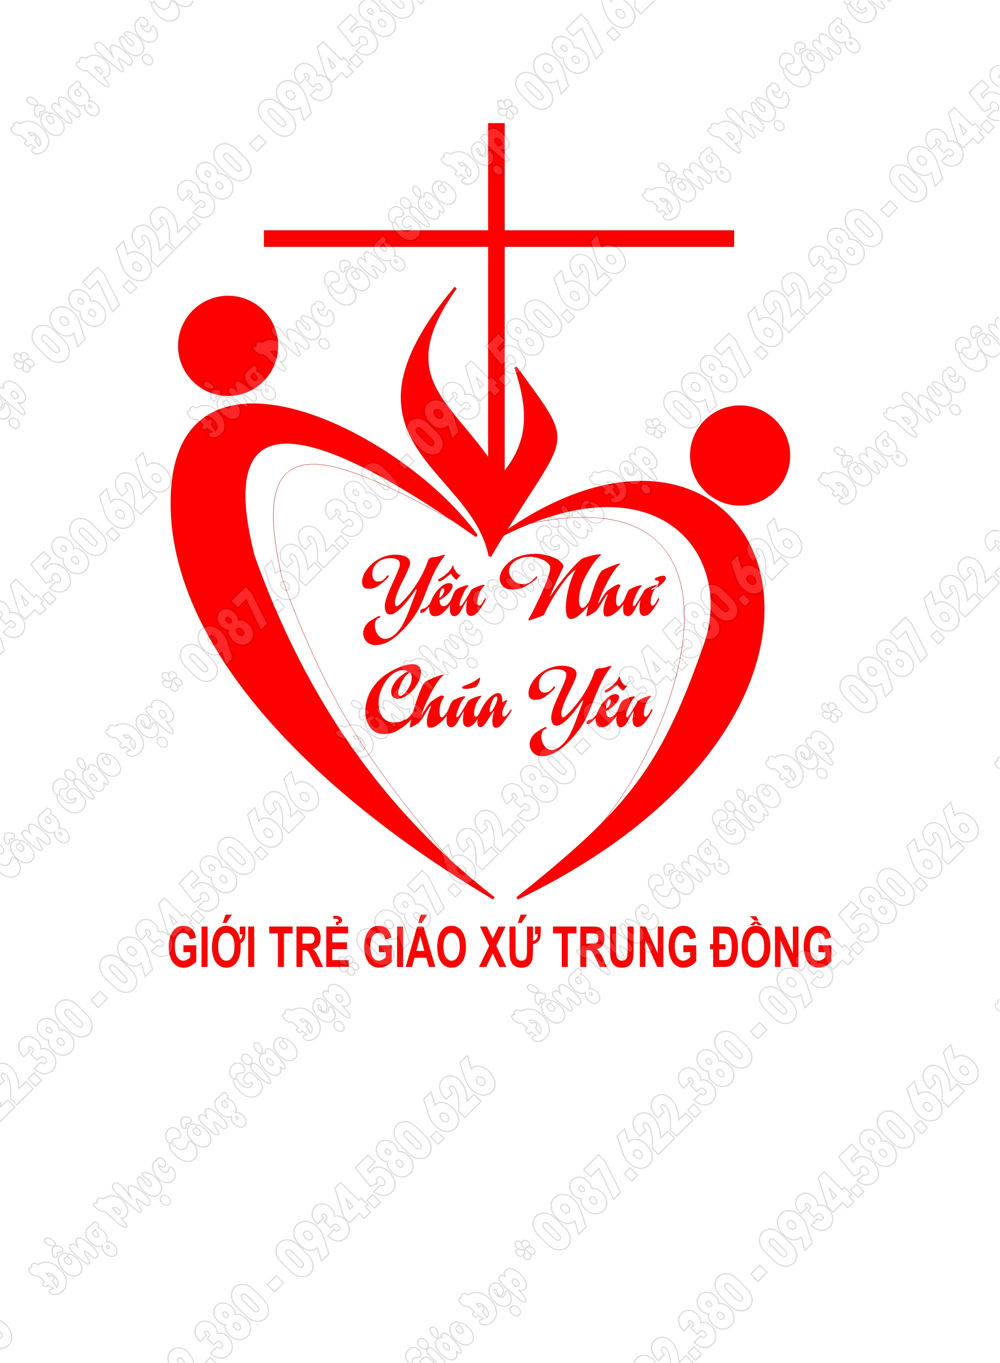 https://dongphucvaquatang.vn/logo-cong-giao